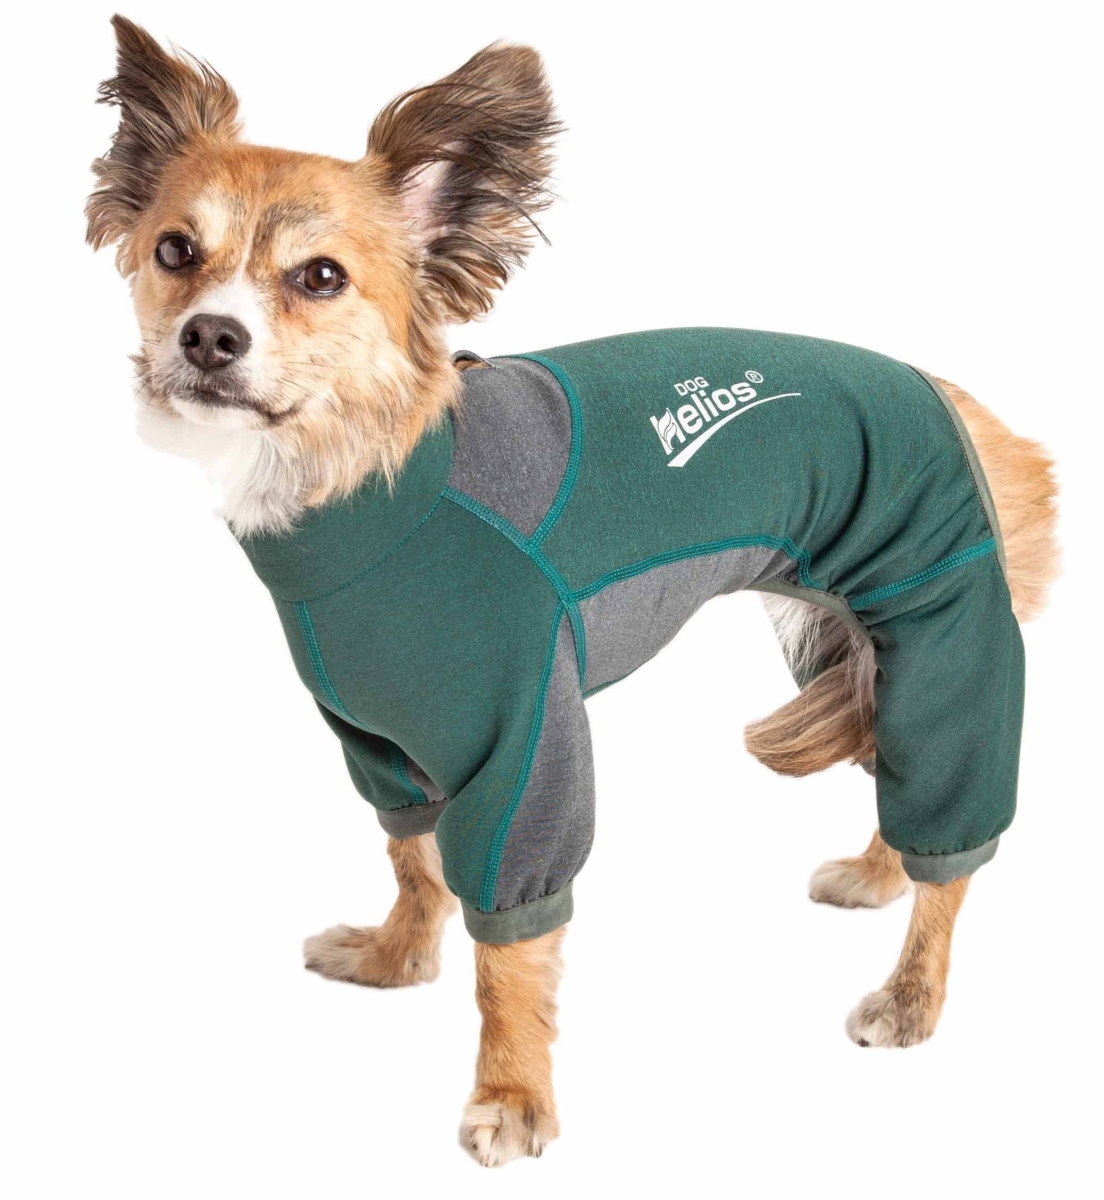 Yghl8gnsm Rufflex 4-way-stretch Breathable Full Bodied Performance Dog Warmup Track Suit - Green & Grey, Small